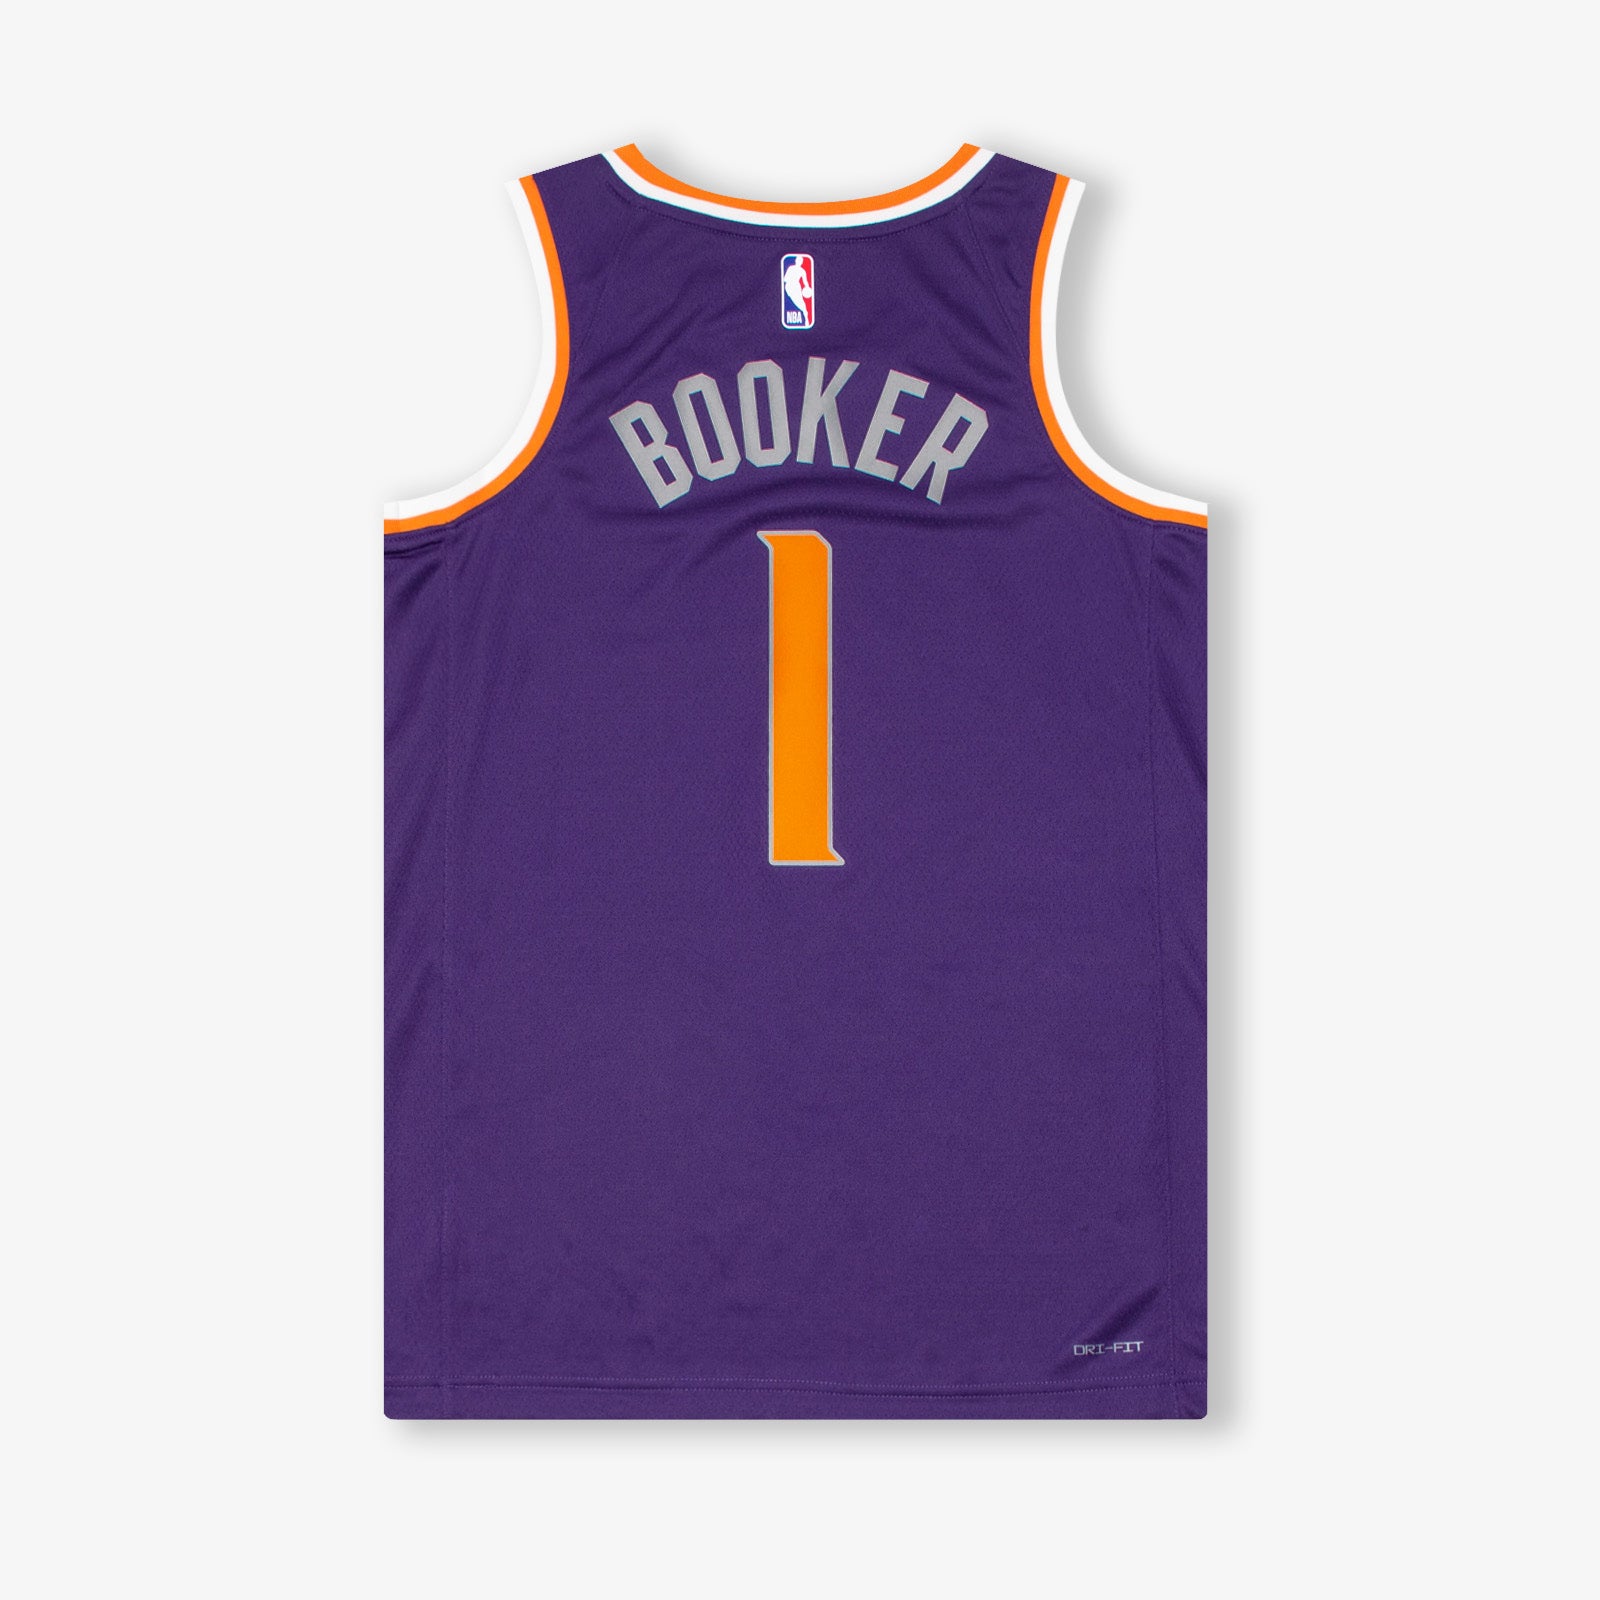 Devin Booker Phoenix Suns Nike Classic Edition Swingman Jersey M